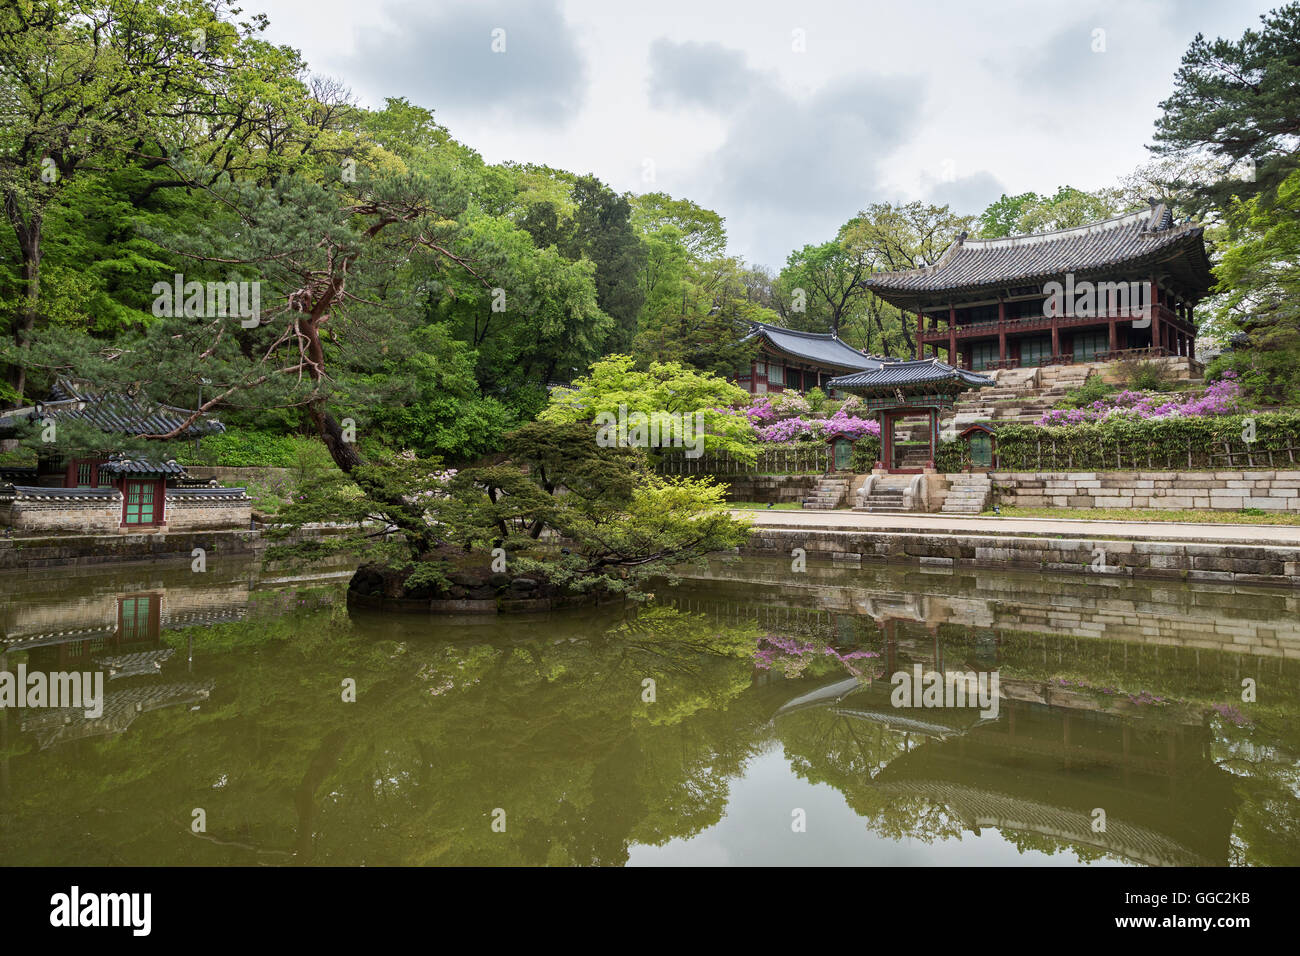 Buyongji Pond and Juhamnu Pavilion at Huwon (Secret Garden) at the Changdeokgung Palace in Seoul, South Korea. Stock Photo